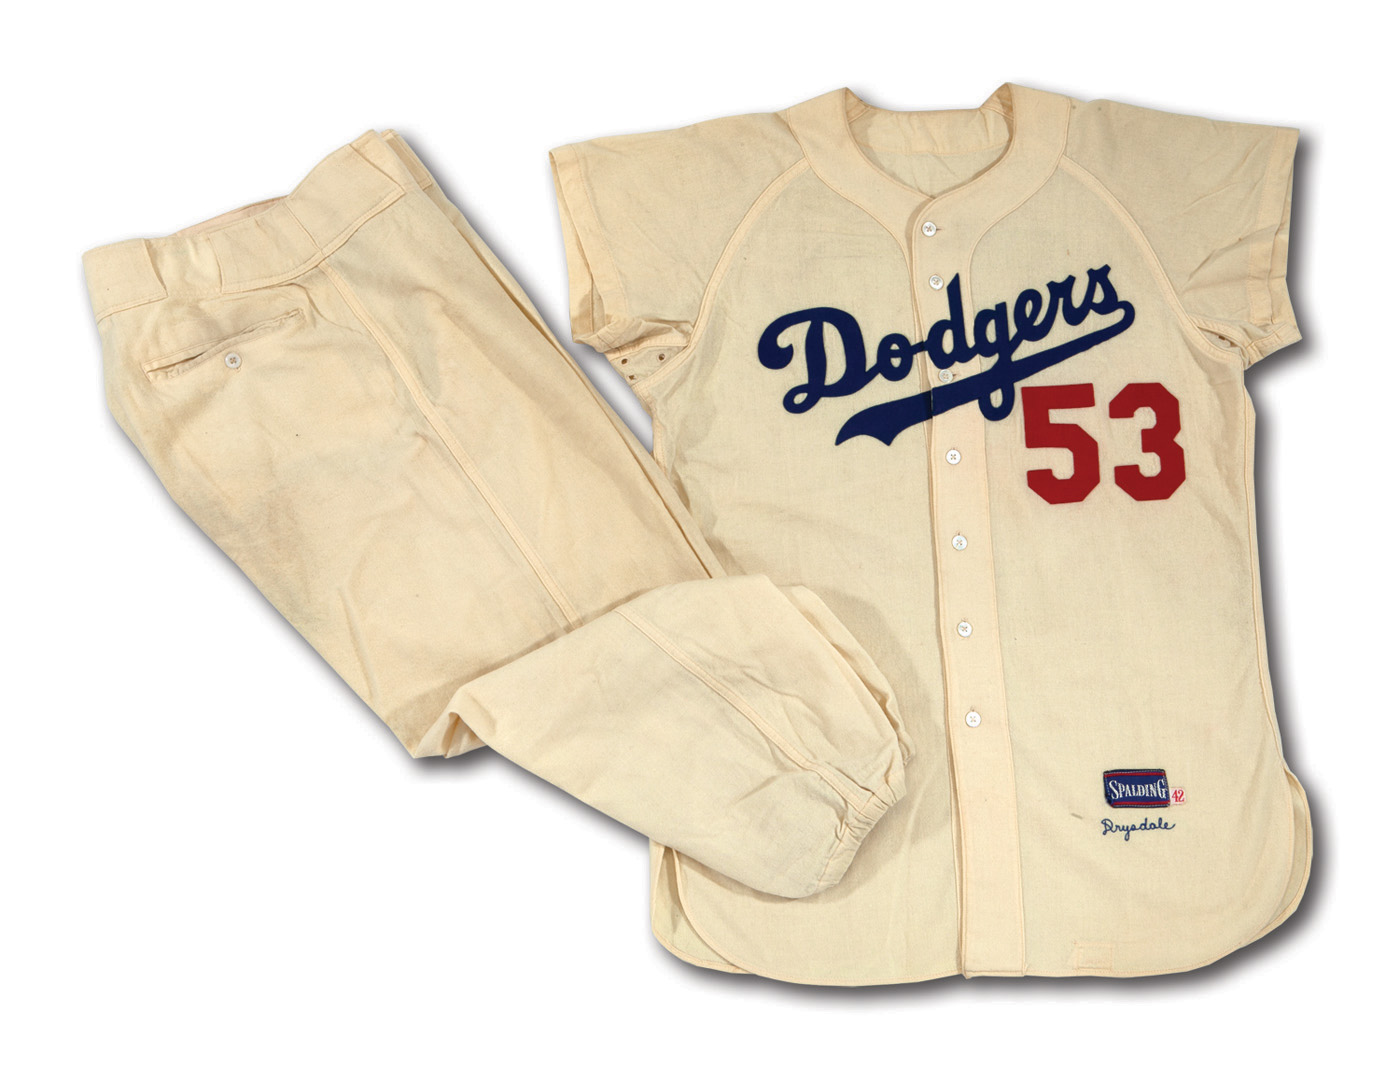 Check Out this Vintage Dodger Pinstripes Uniform - 1933